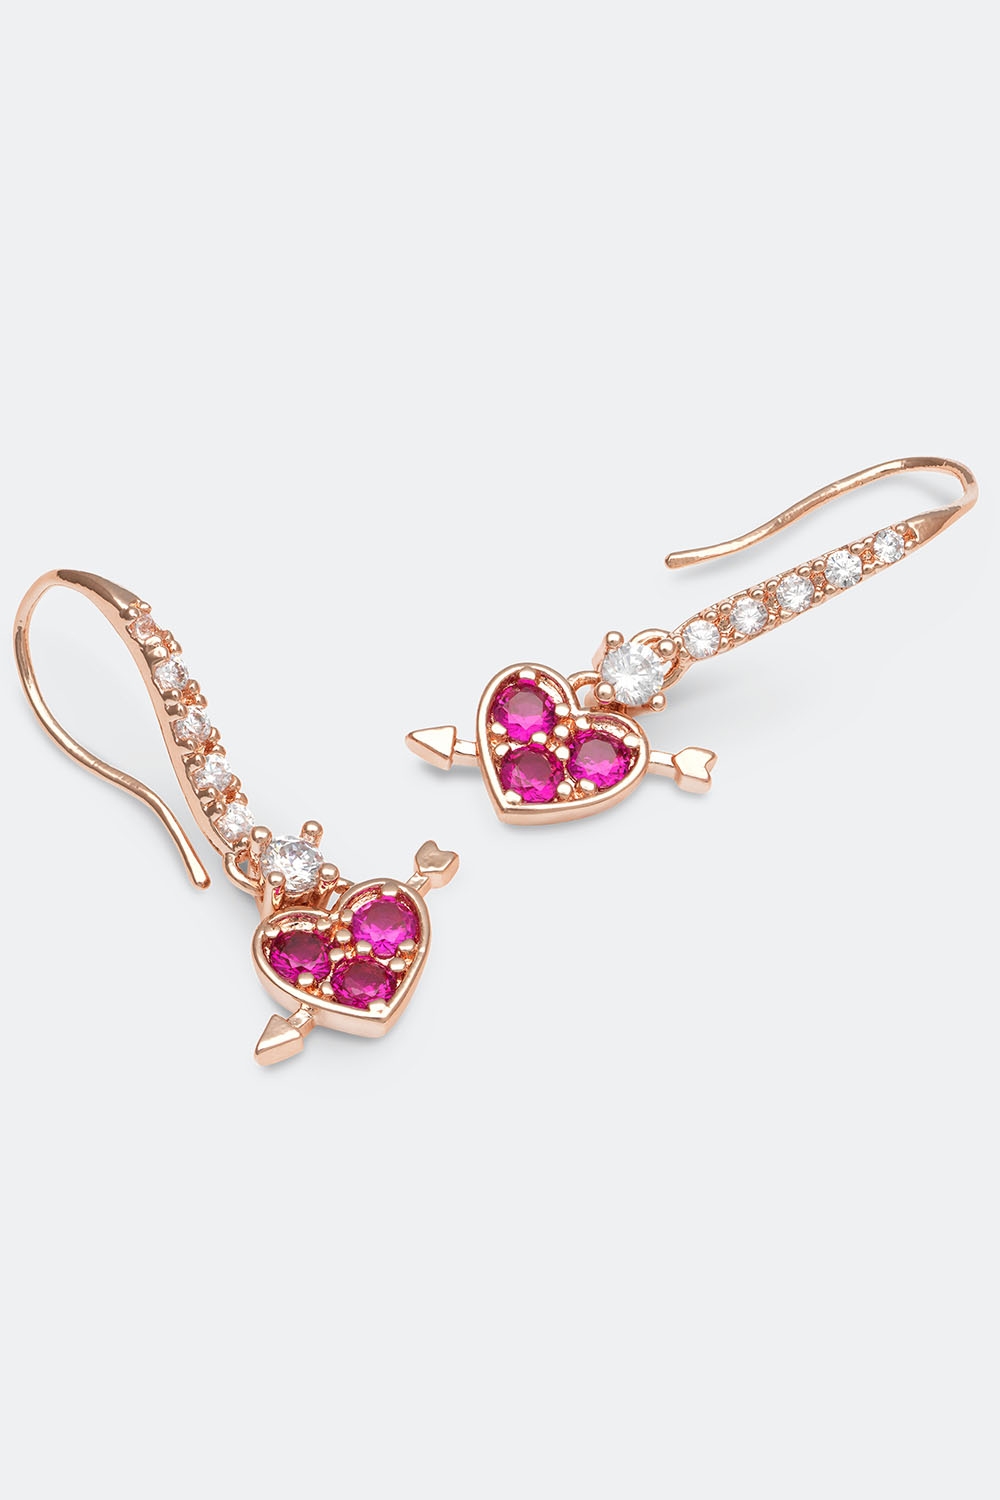 Lowe earrings - Pink ruby ryhmässä Lily and Rose - Korvakorut @ Glitter (253000995502)